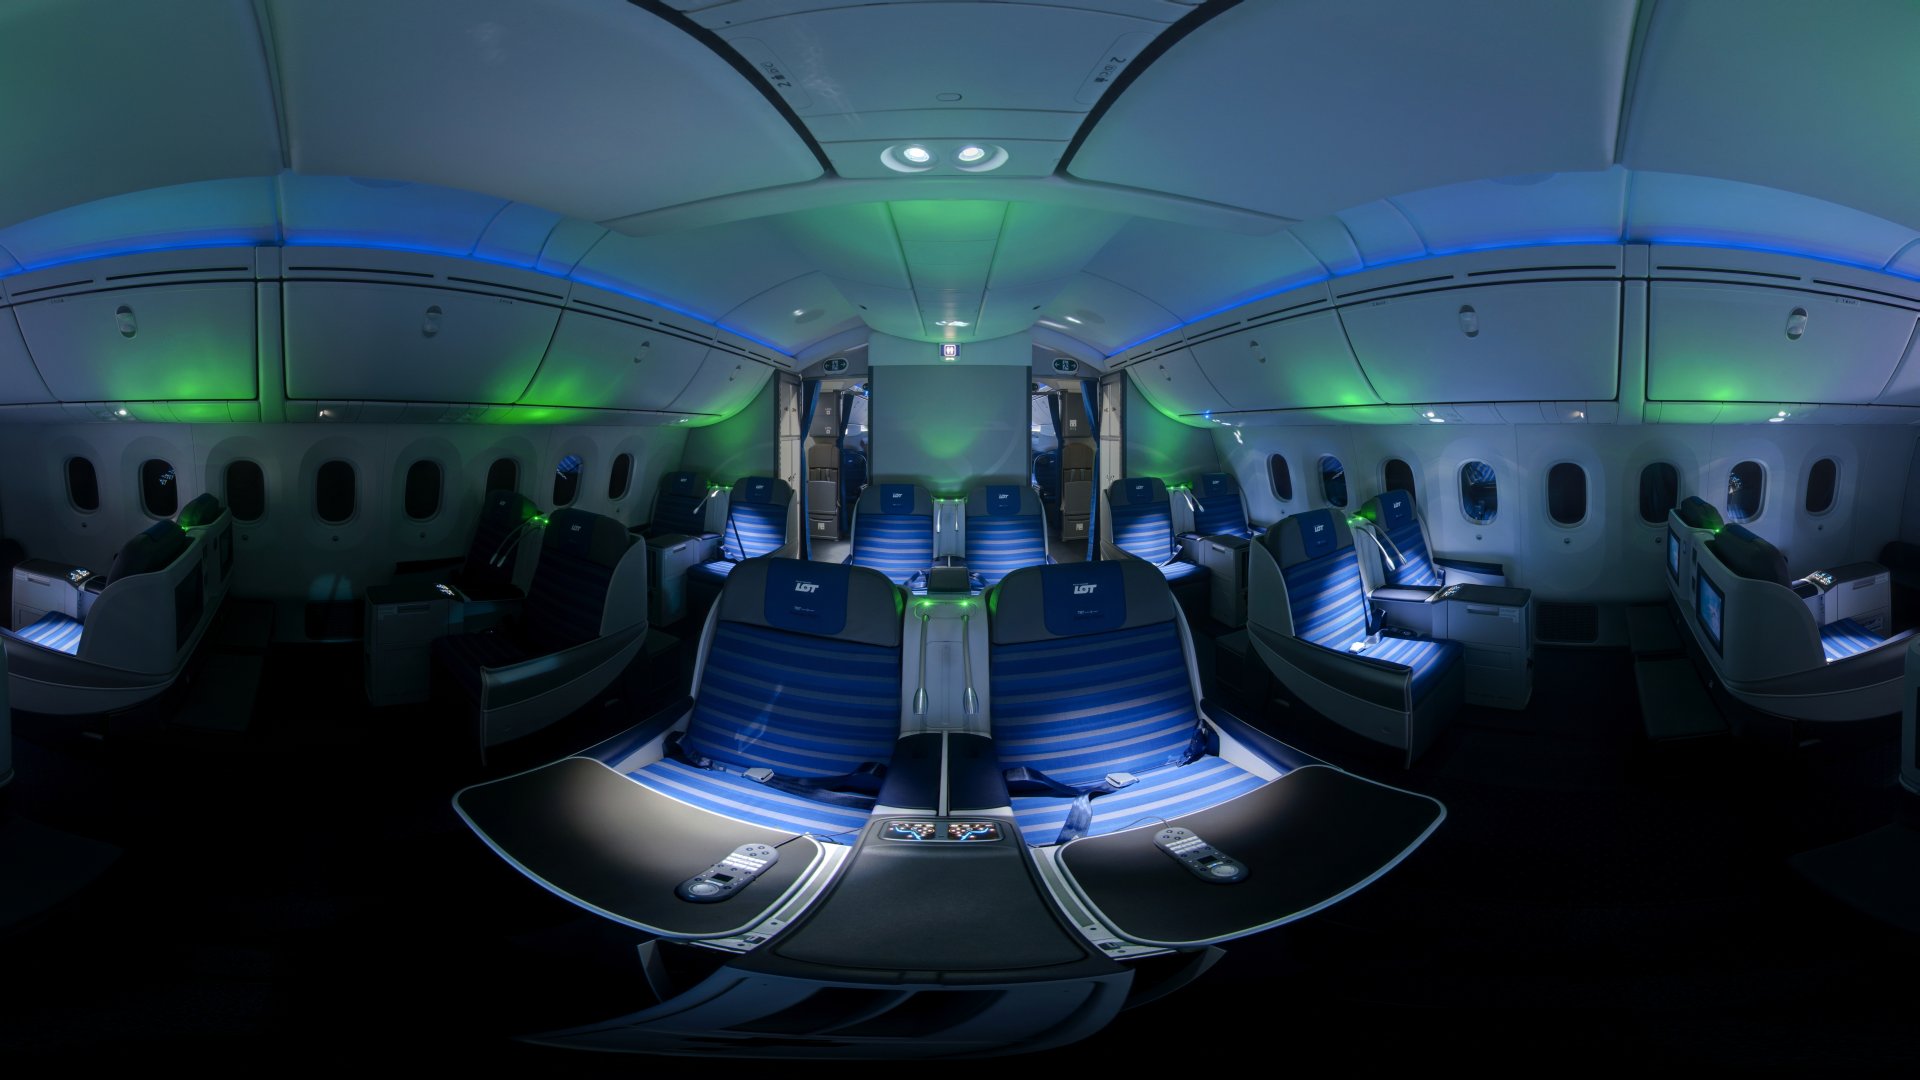 Boeing Dreamliner - panorama 360